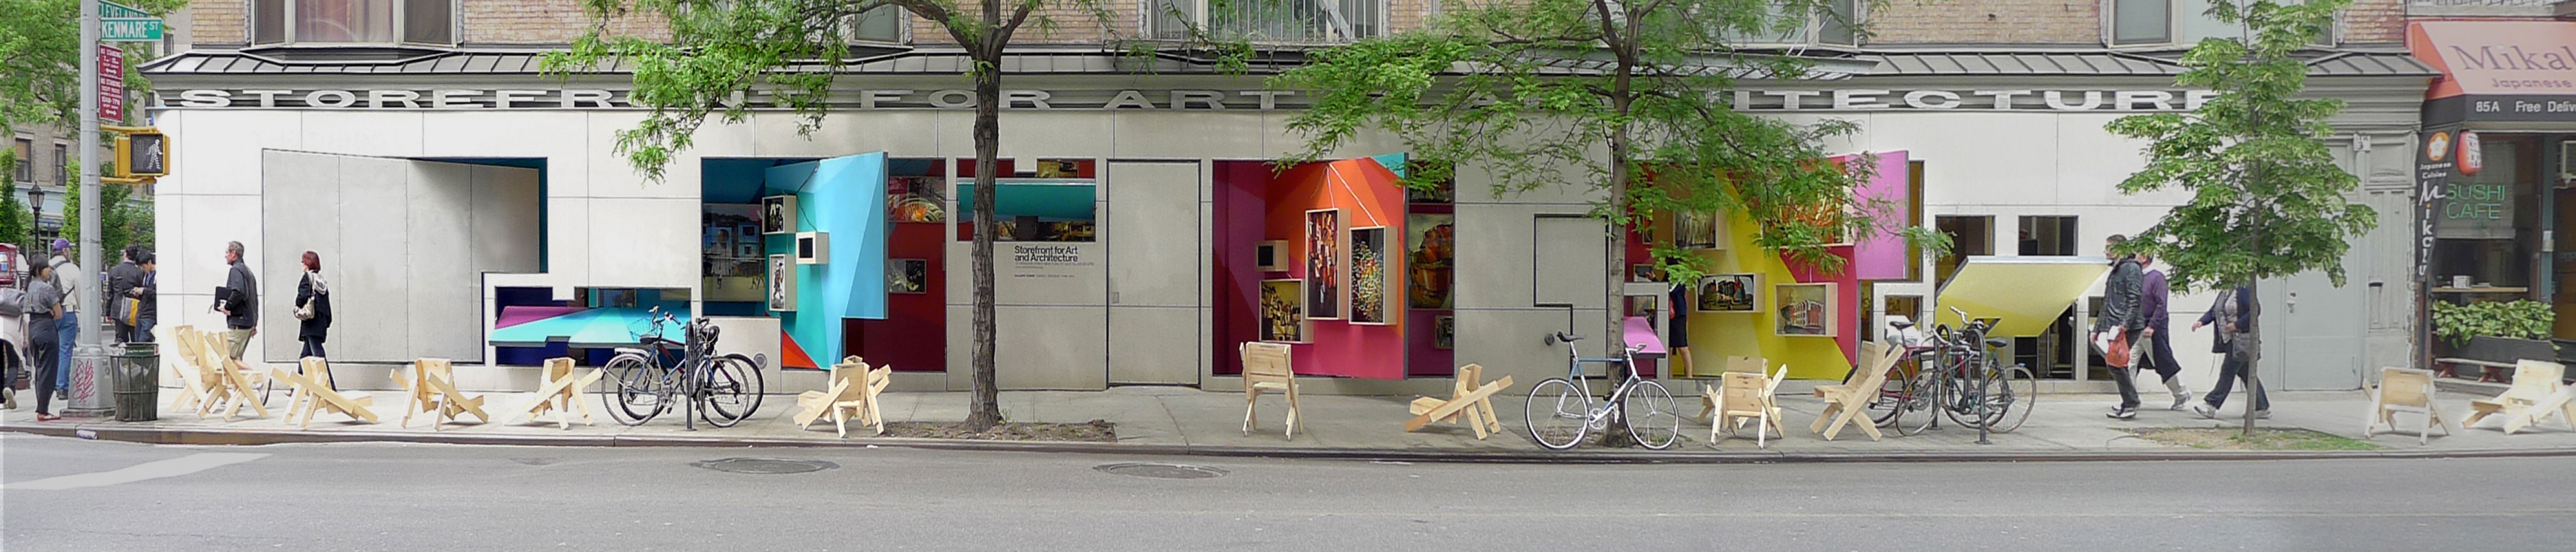 Storefront for Art and Architecture en Nueva York. Eva Franch i Gilabert